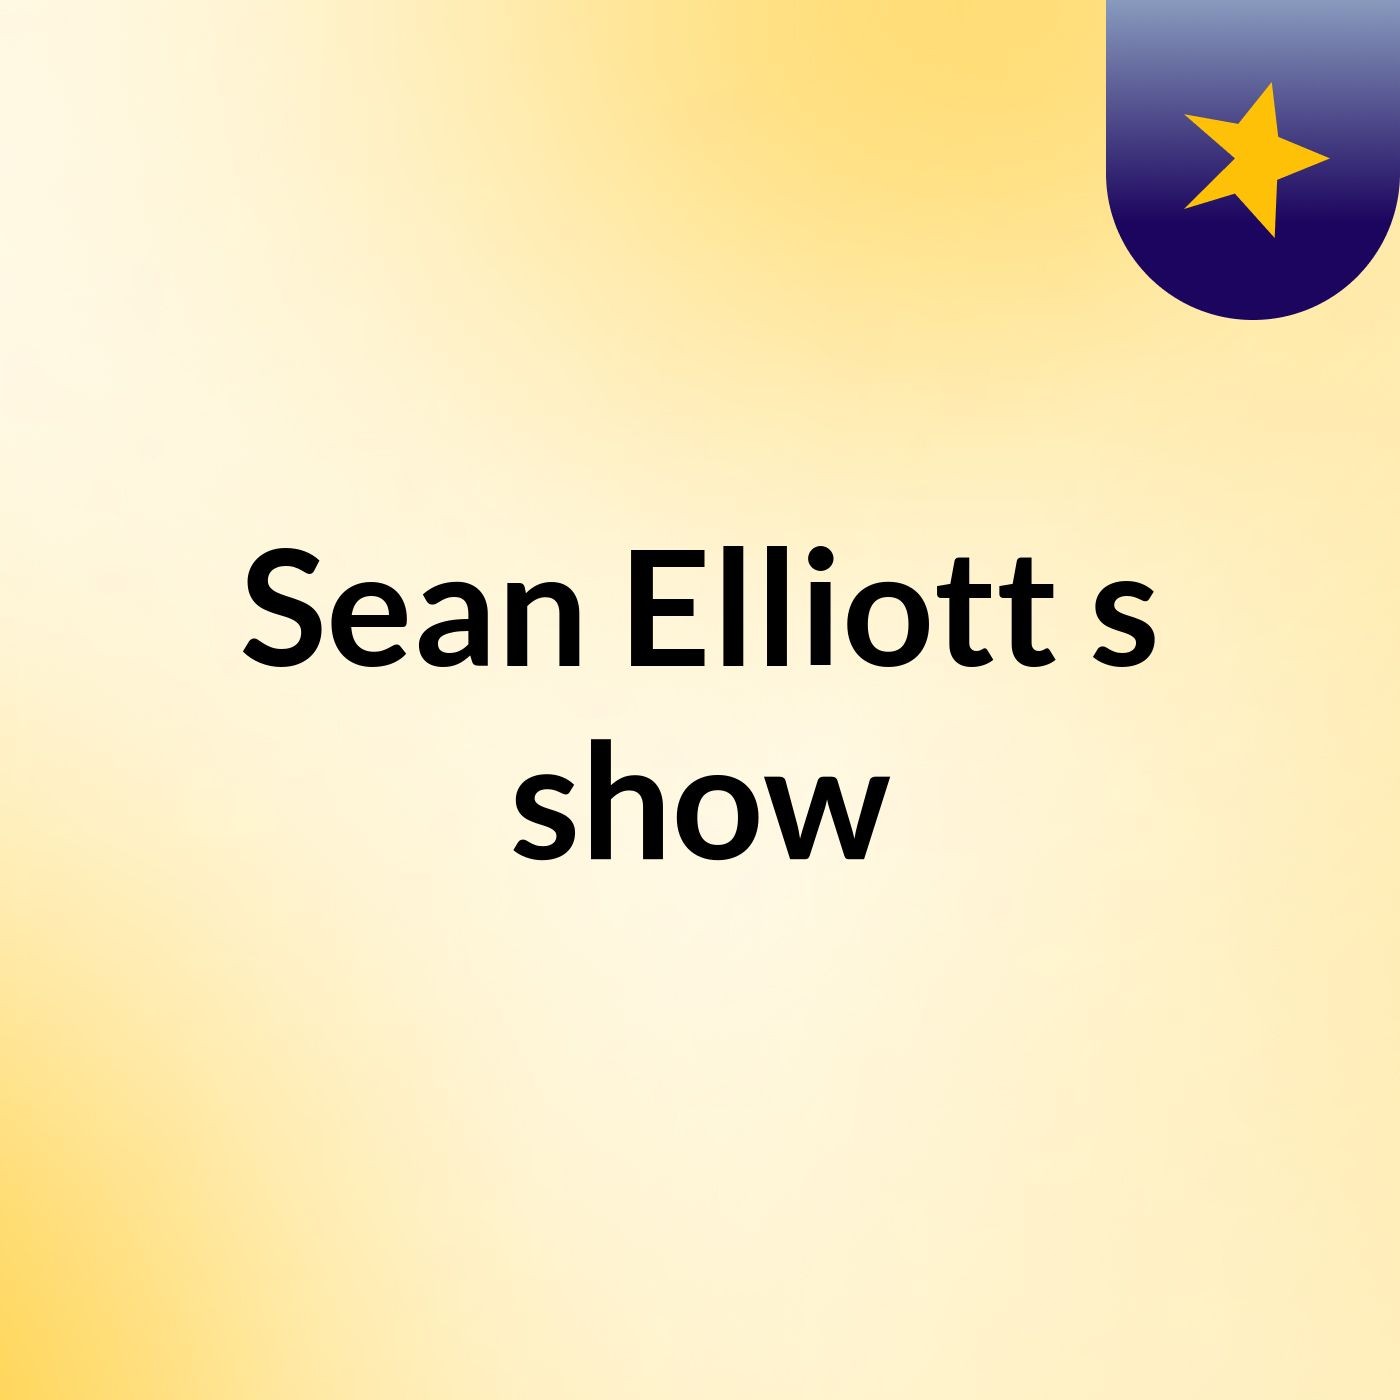 Sean Elliott's show